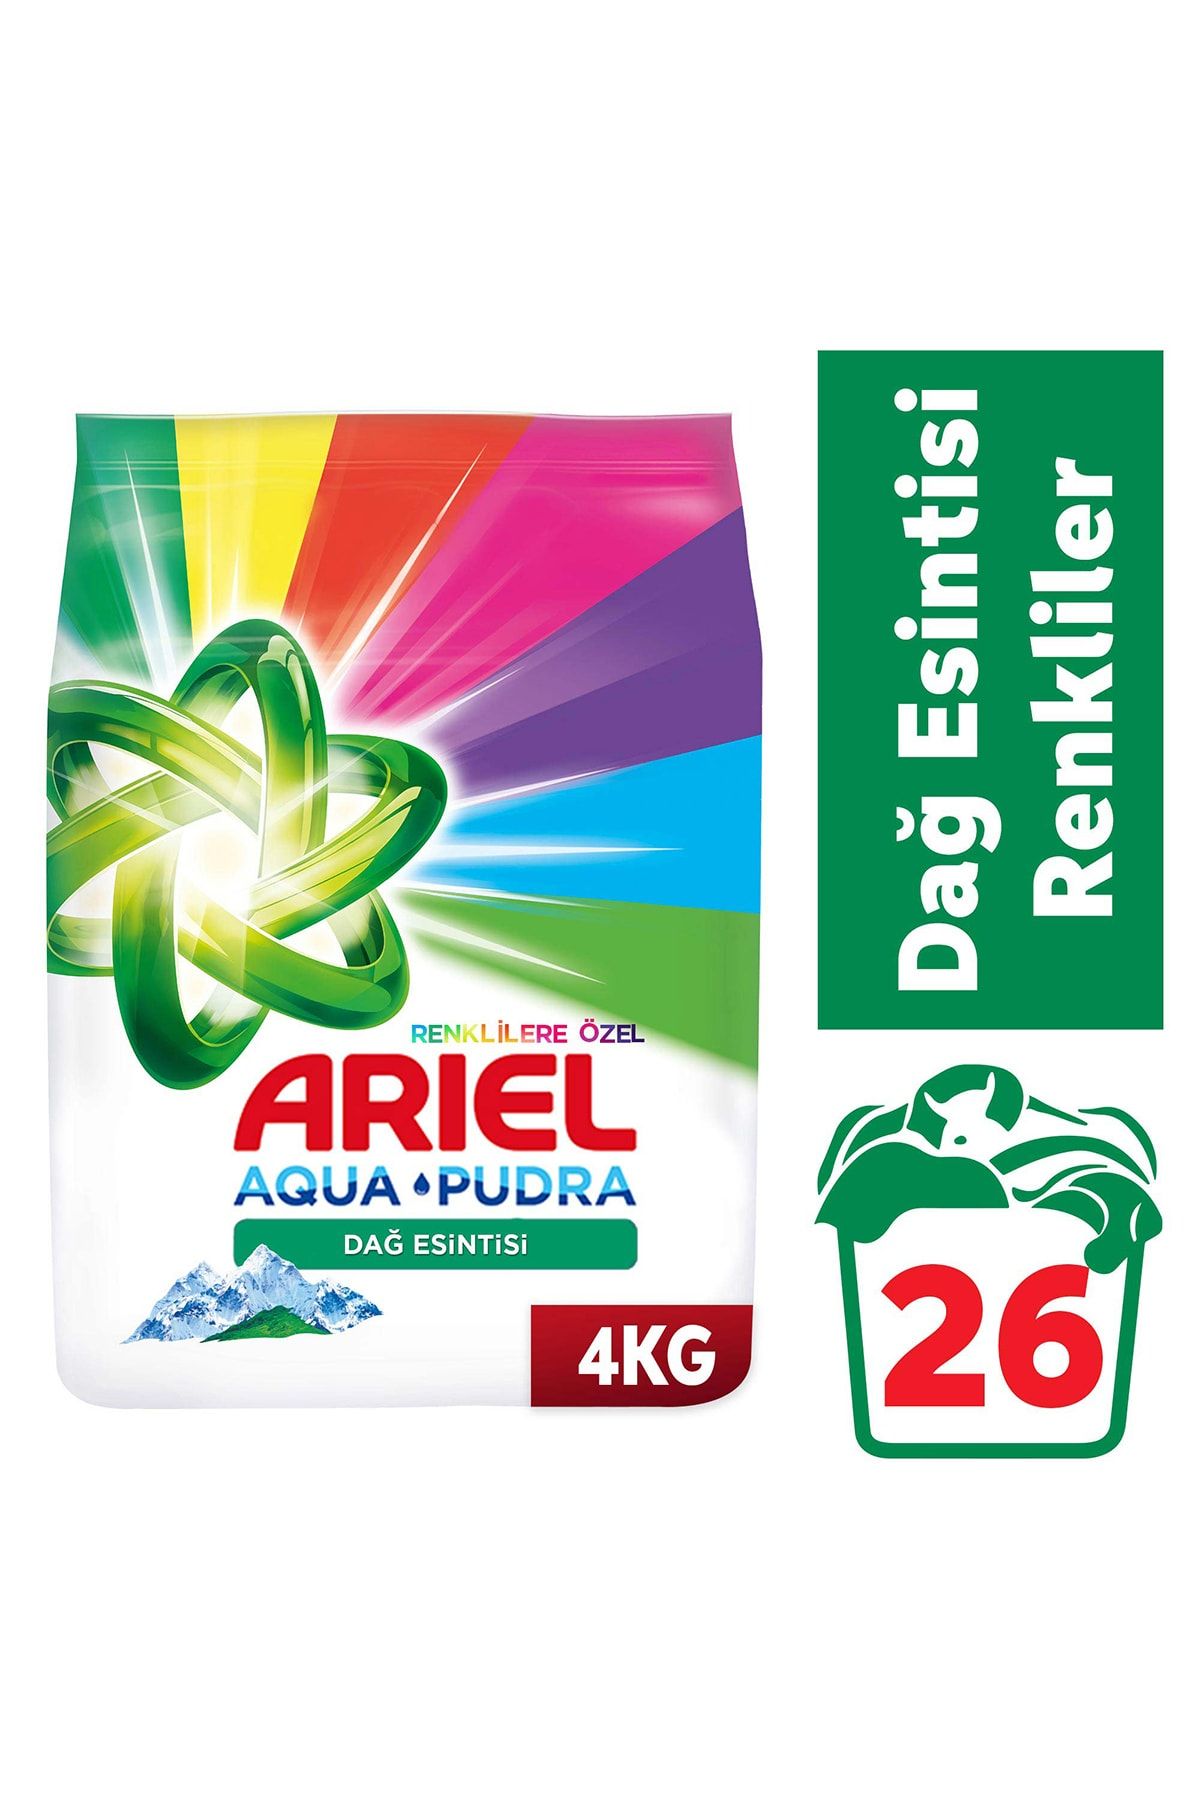 Ariel Dağ Esintisi Renklilere Özel 4 Kg Aquapudra Toz Çamaşır Deterjanı